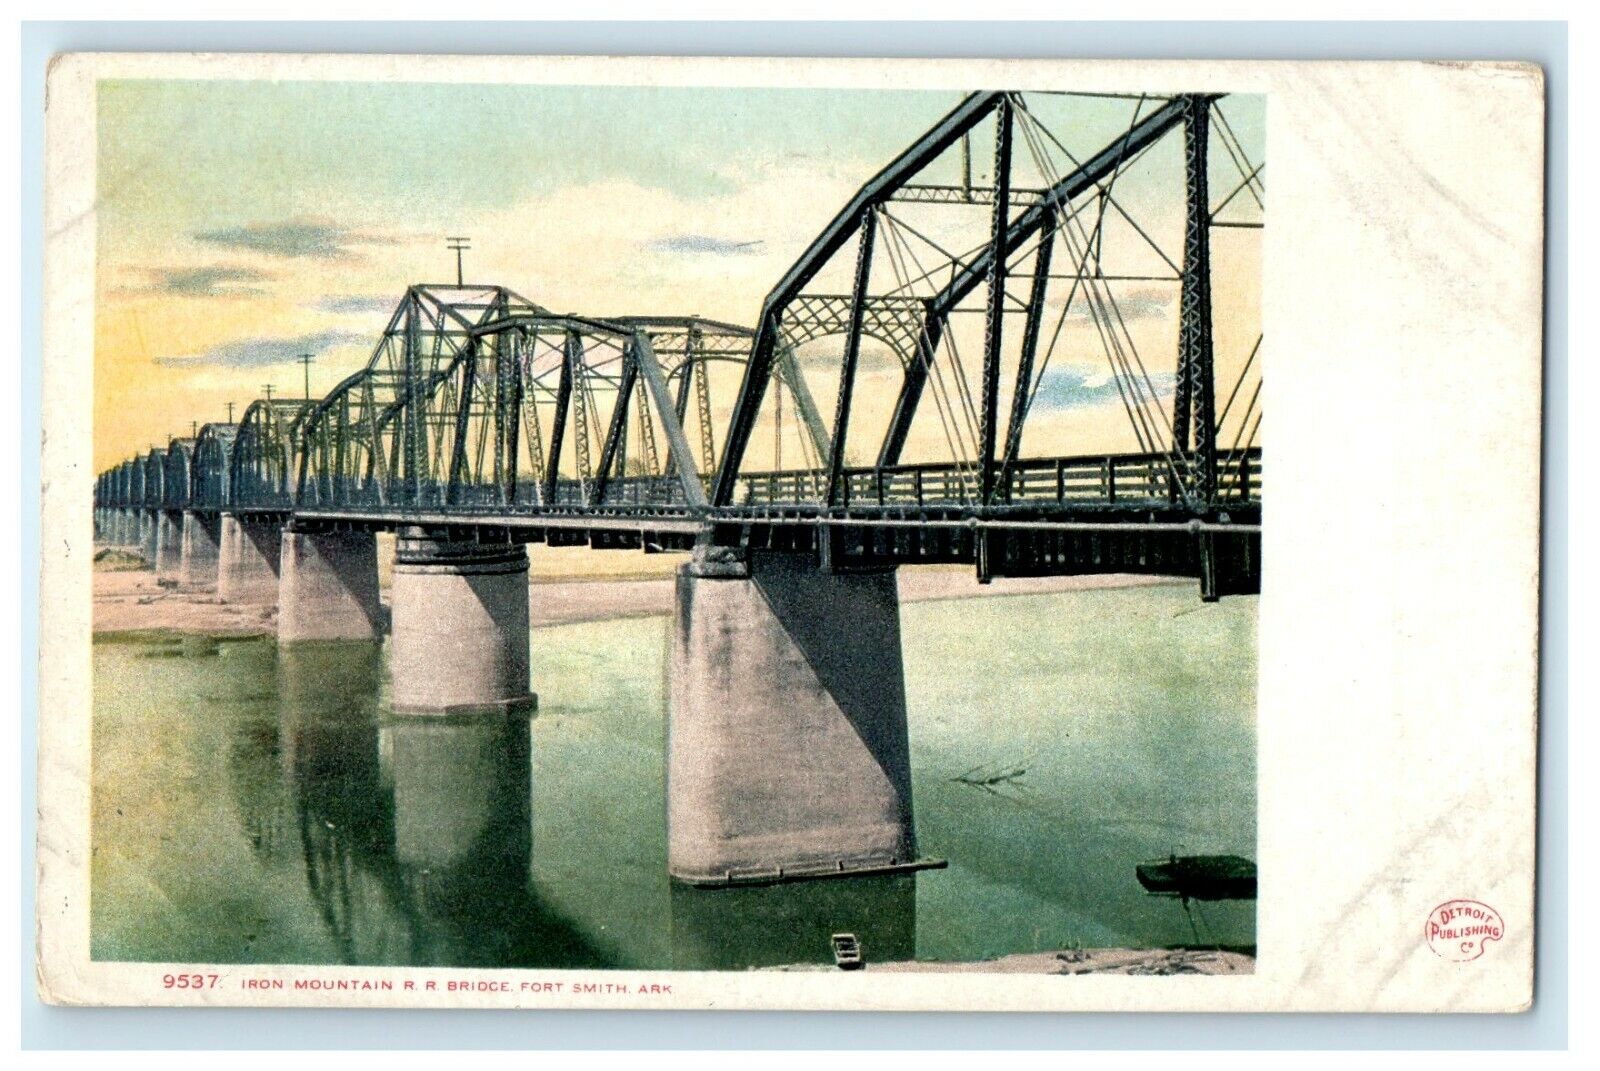 c1905 Iron Mountain Railroad R.R Bridge Fort Smith Arkansas AR Antique Postcard